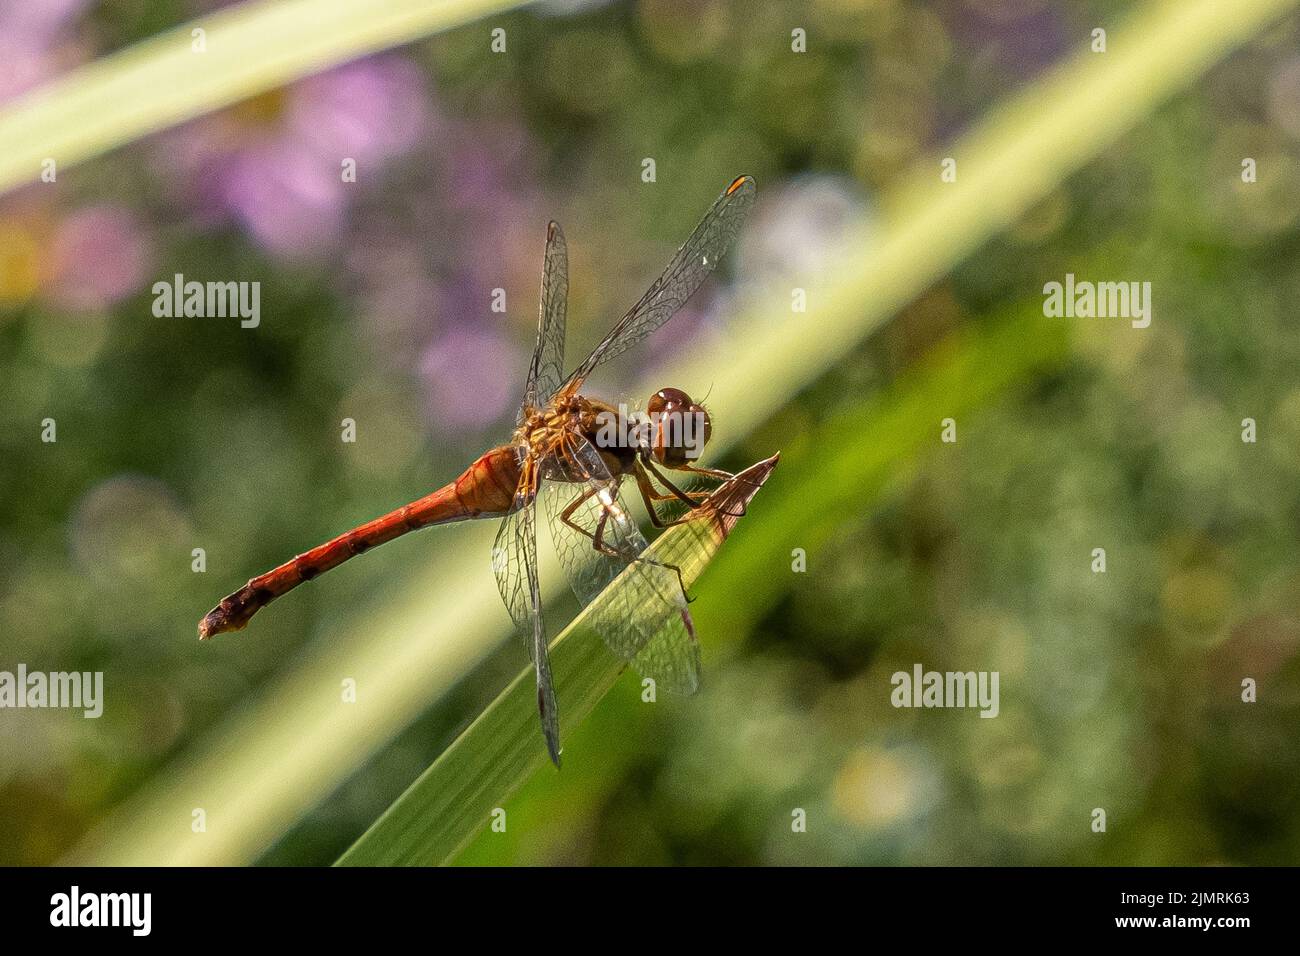 A yellow legged meadowlark dragonfly Stock Photo